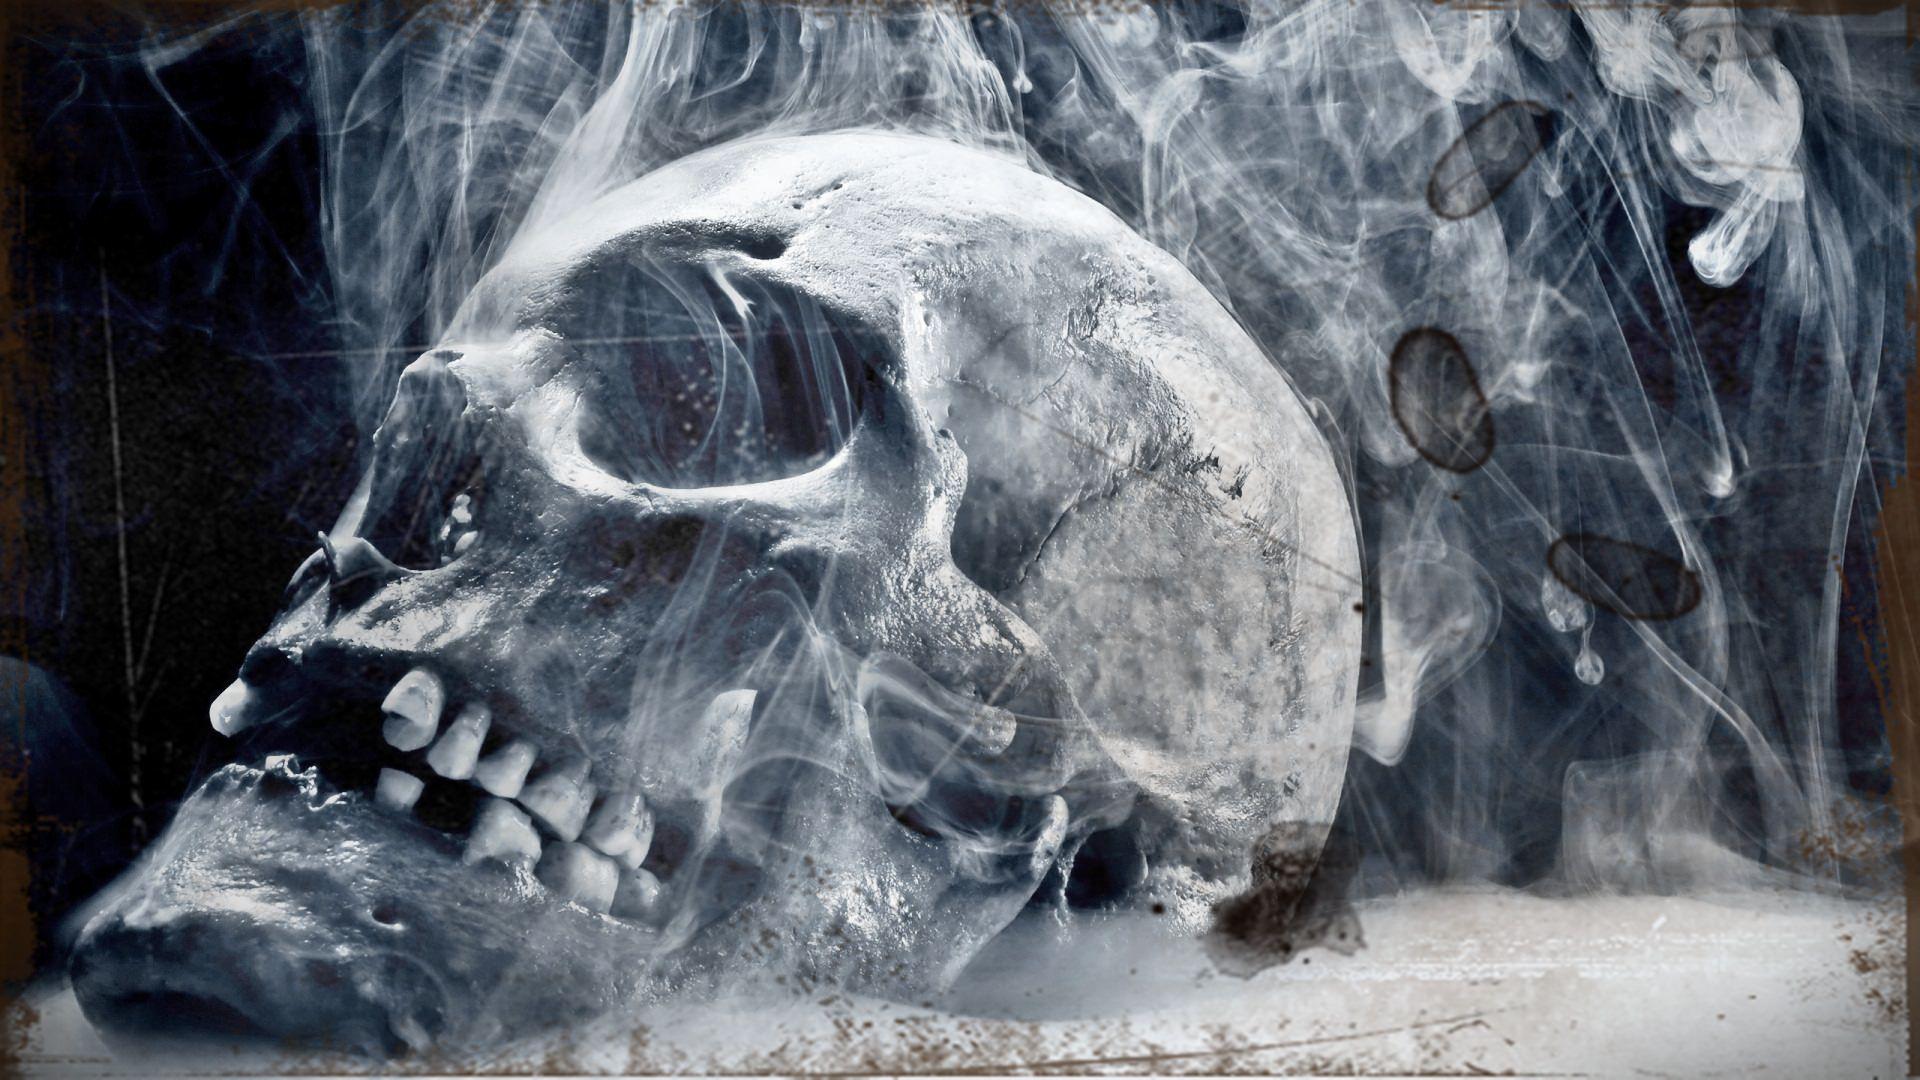 Dangerous Skull Wallpapers HD - Wallpaper Cave
 3d Skull Wallpaper Hd